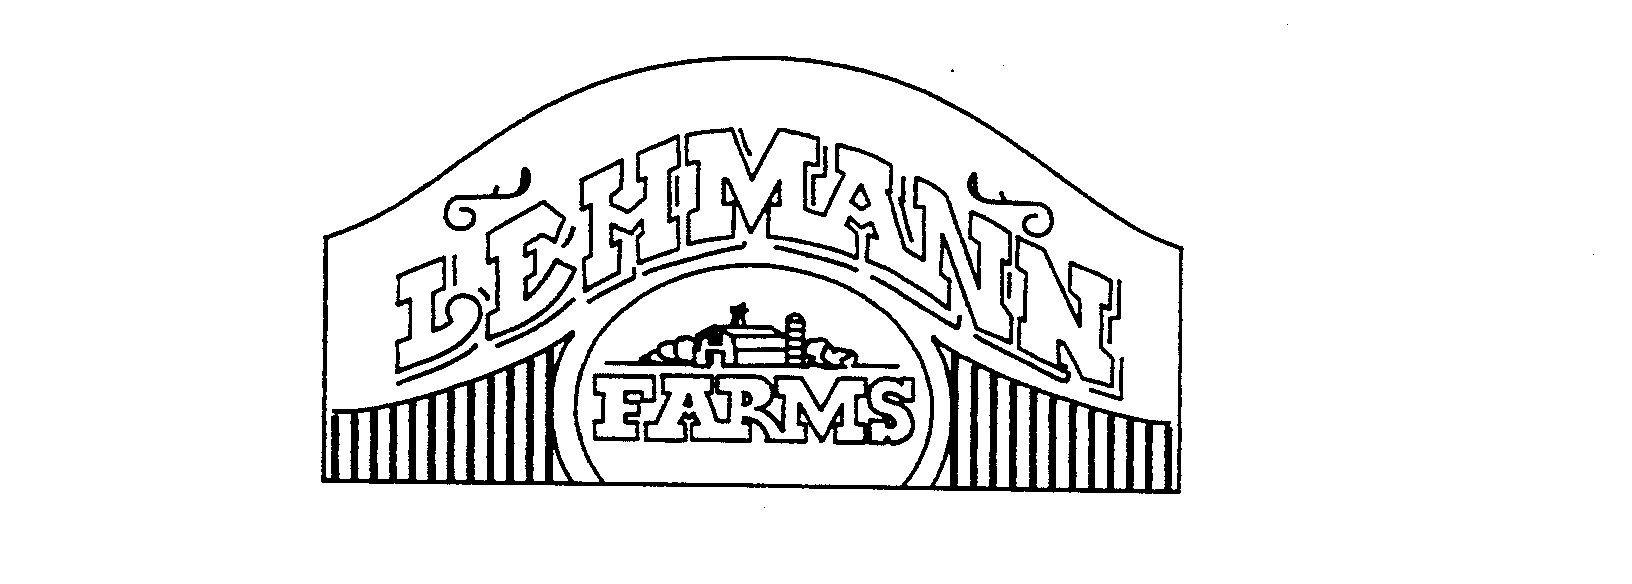 Trademark Logo LEHMANN FARMS